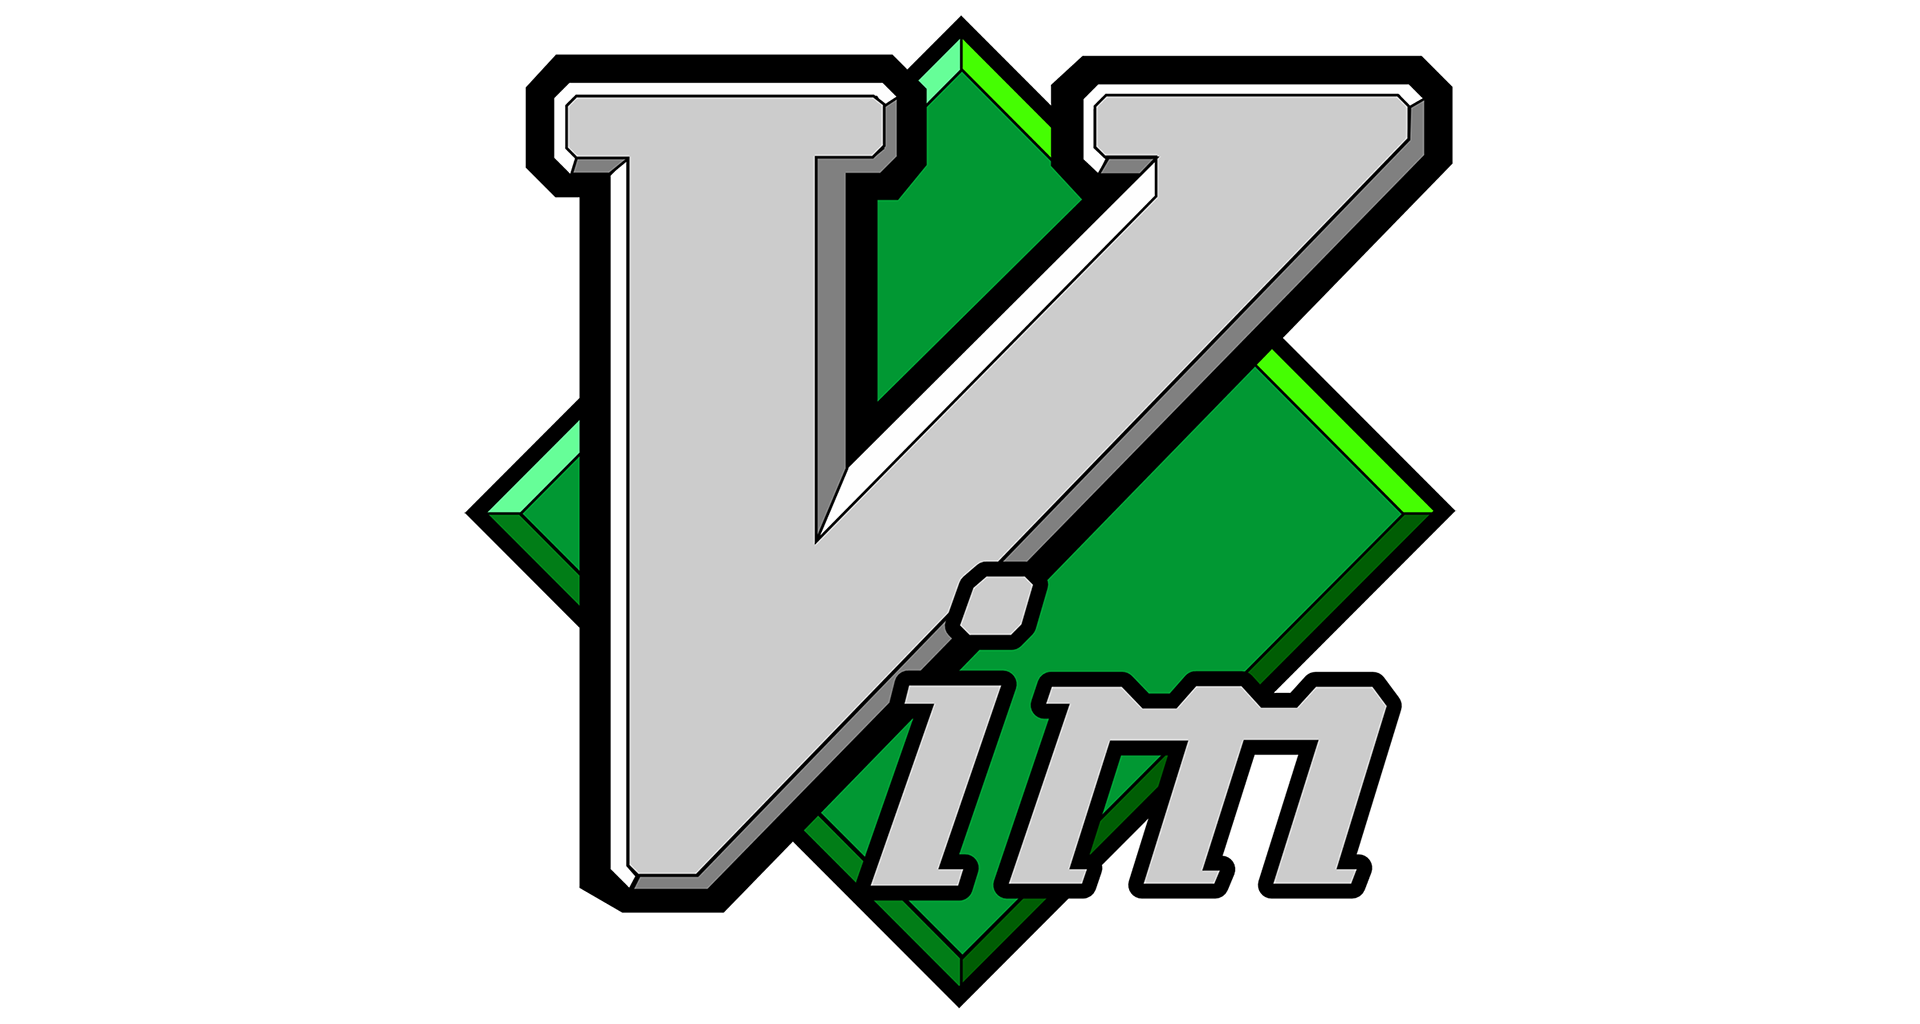 Vim – VI improved